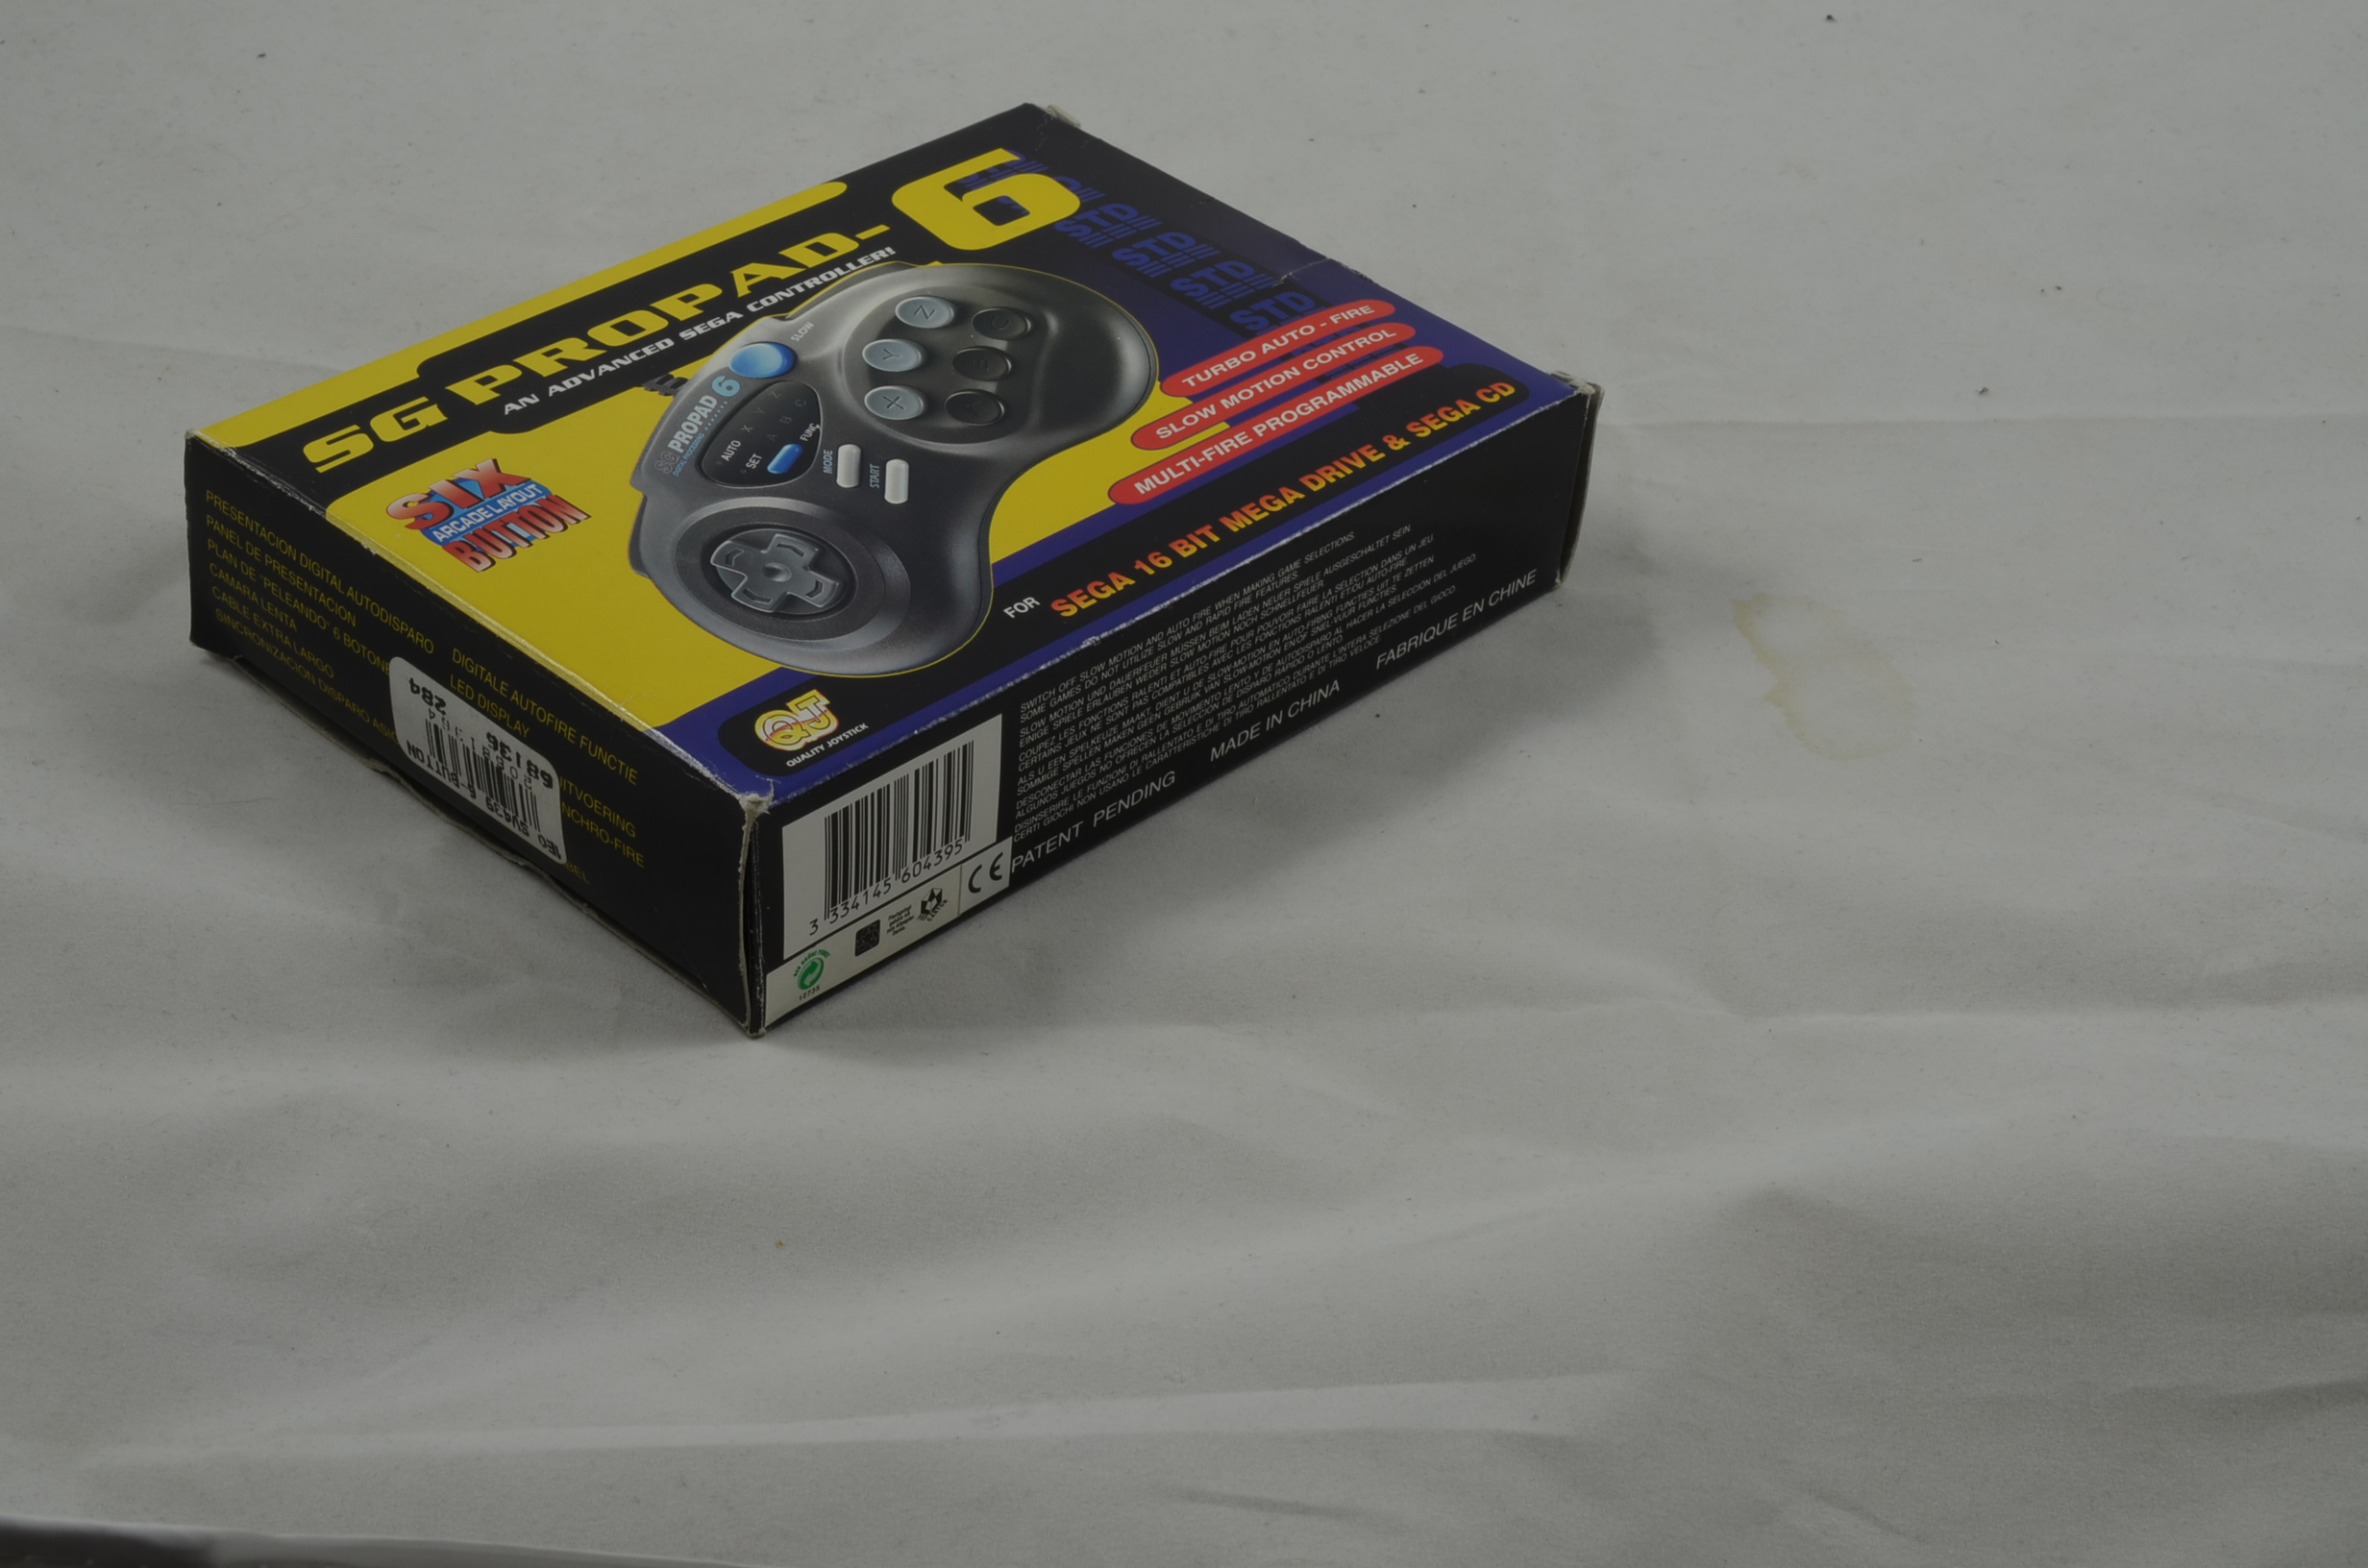 Produktbild von SG Propad 6 Controller Sega Mega Drive mit OVP